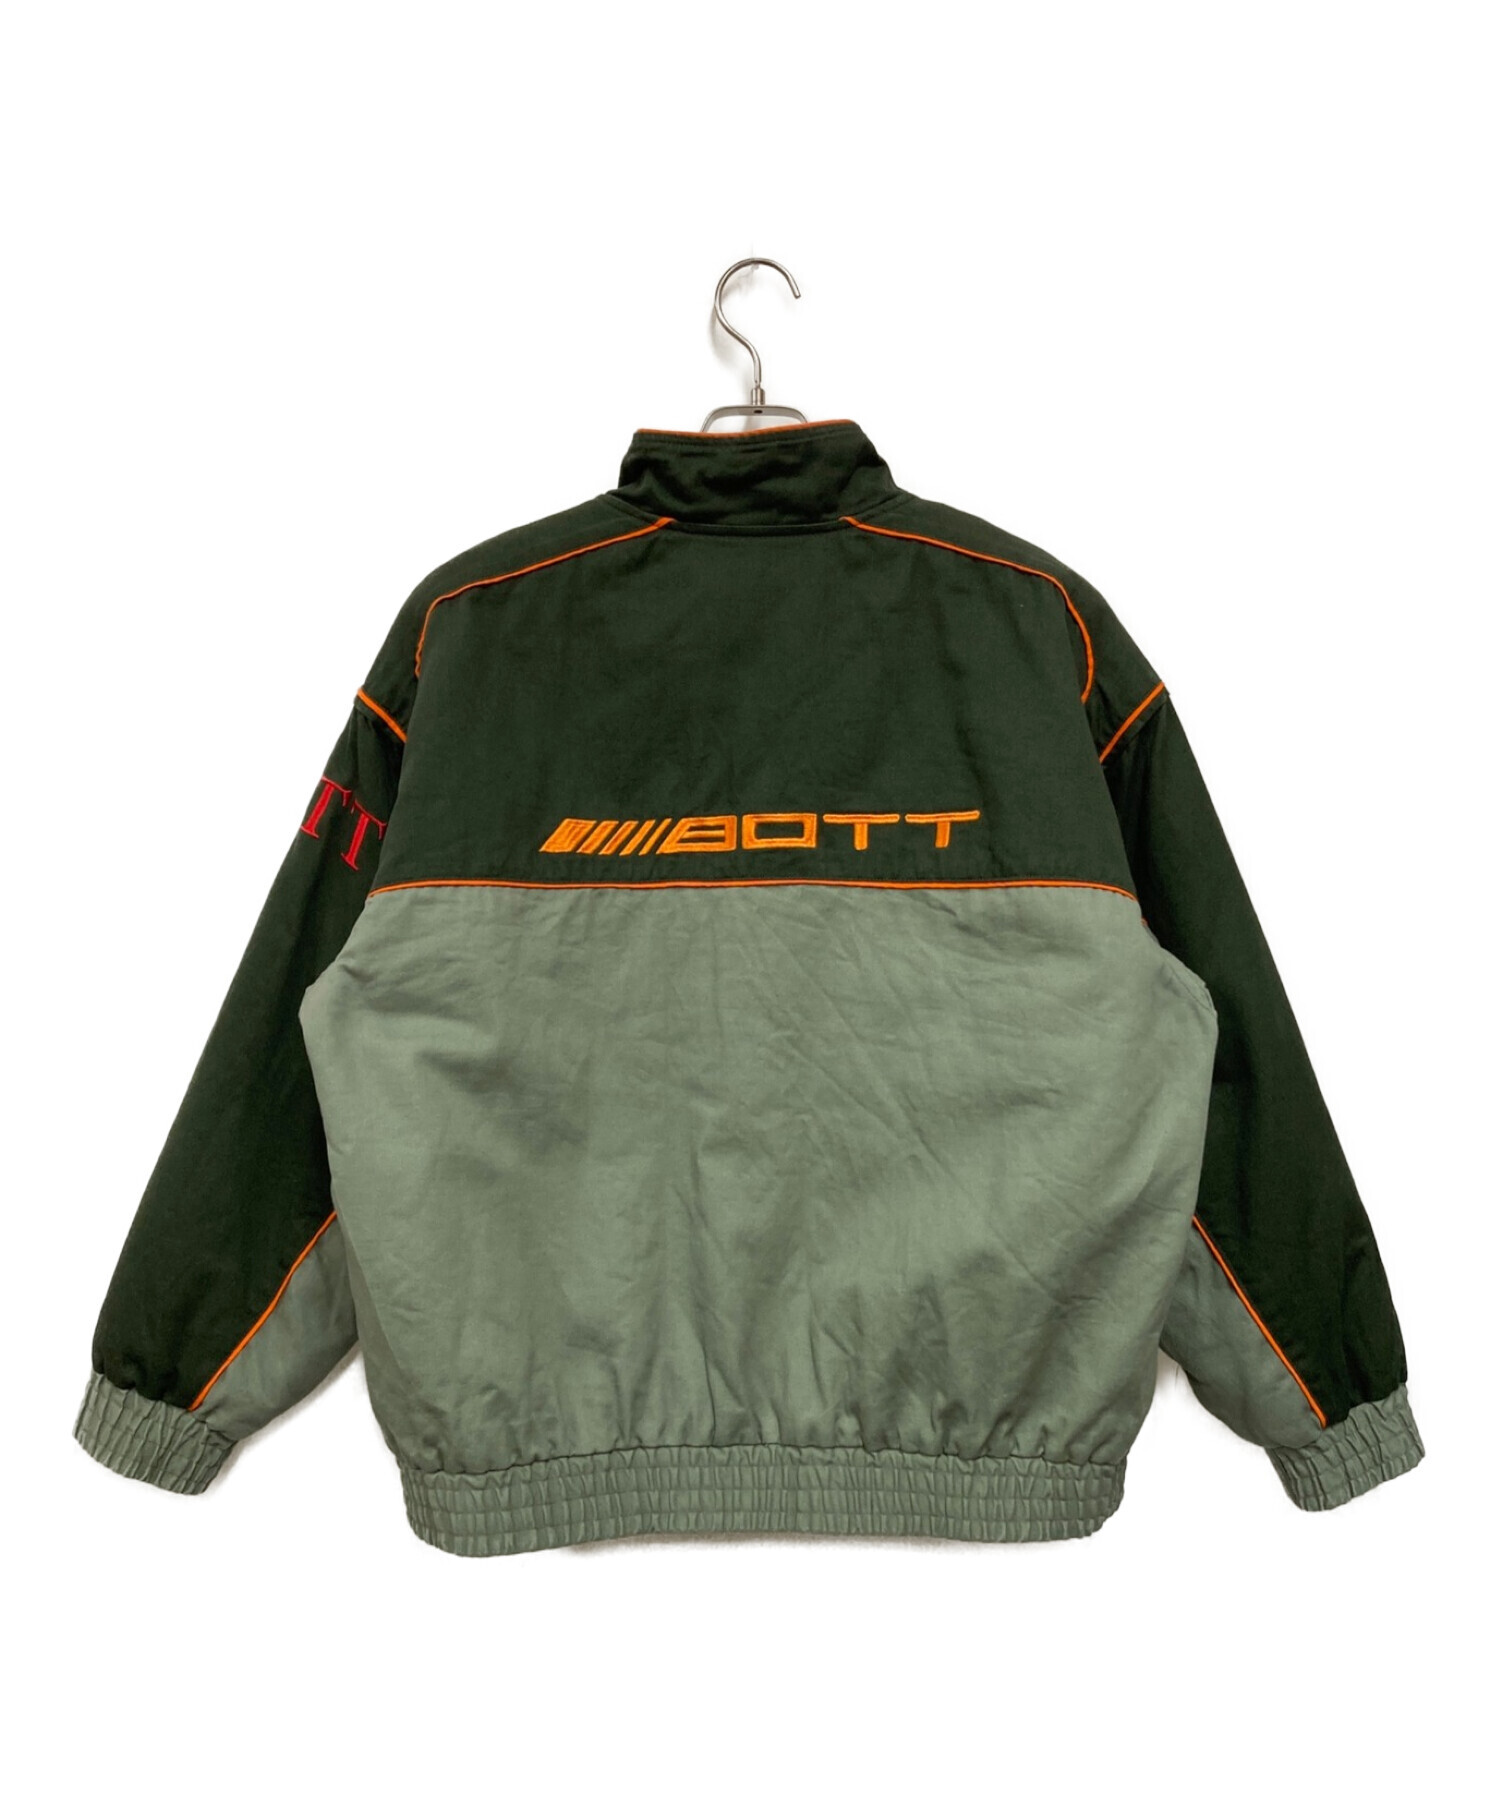 BoTT (ボット) Cotton Racing Jacket カーキ サイズ:L